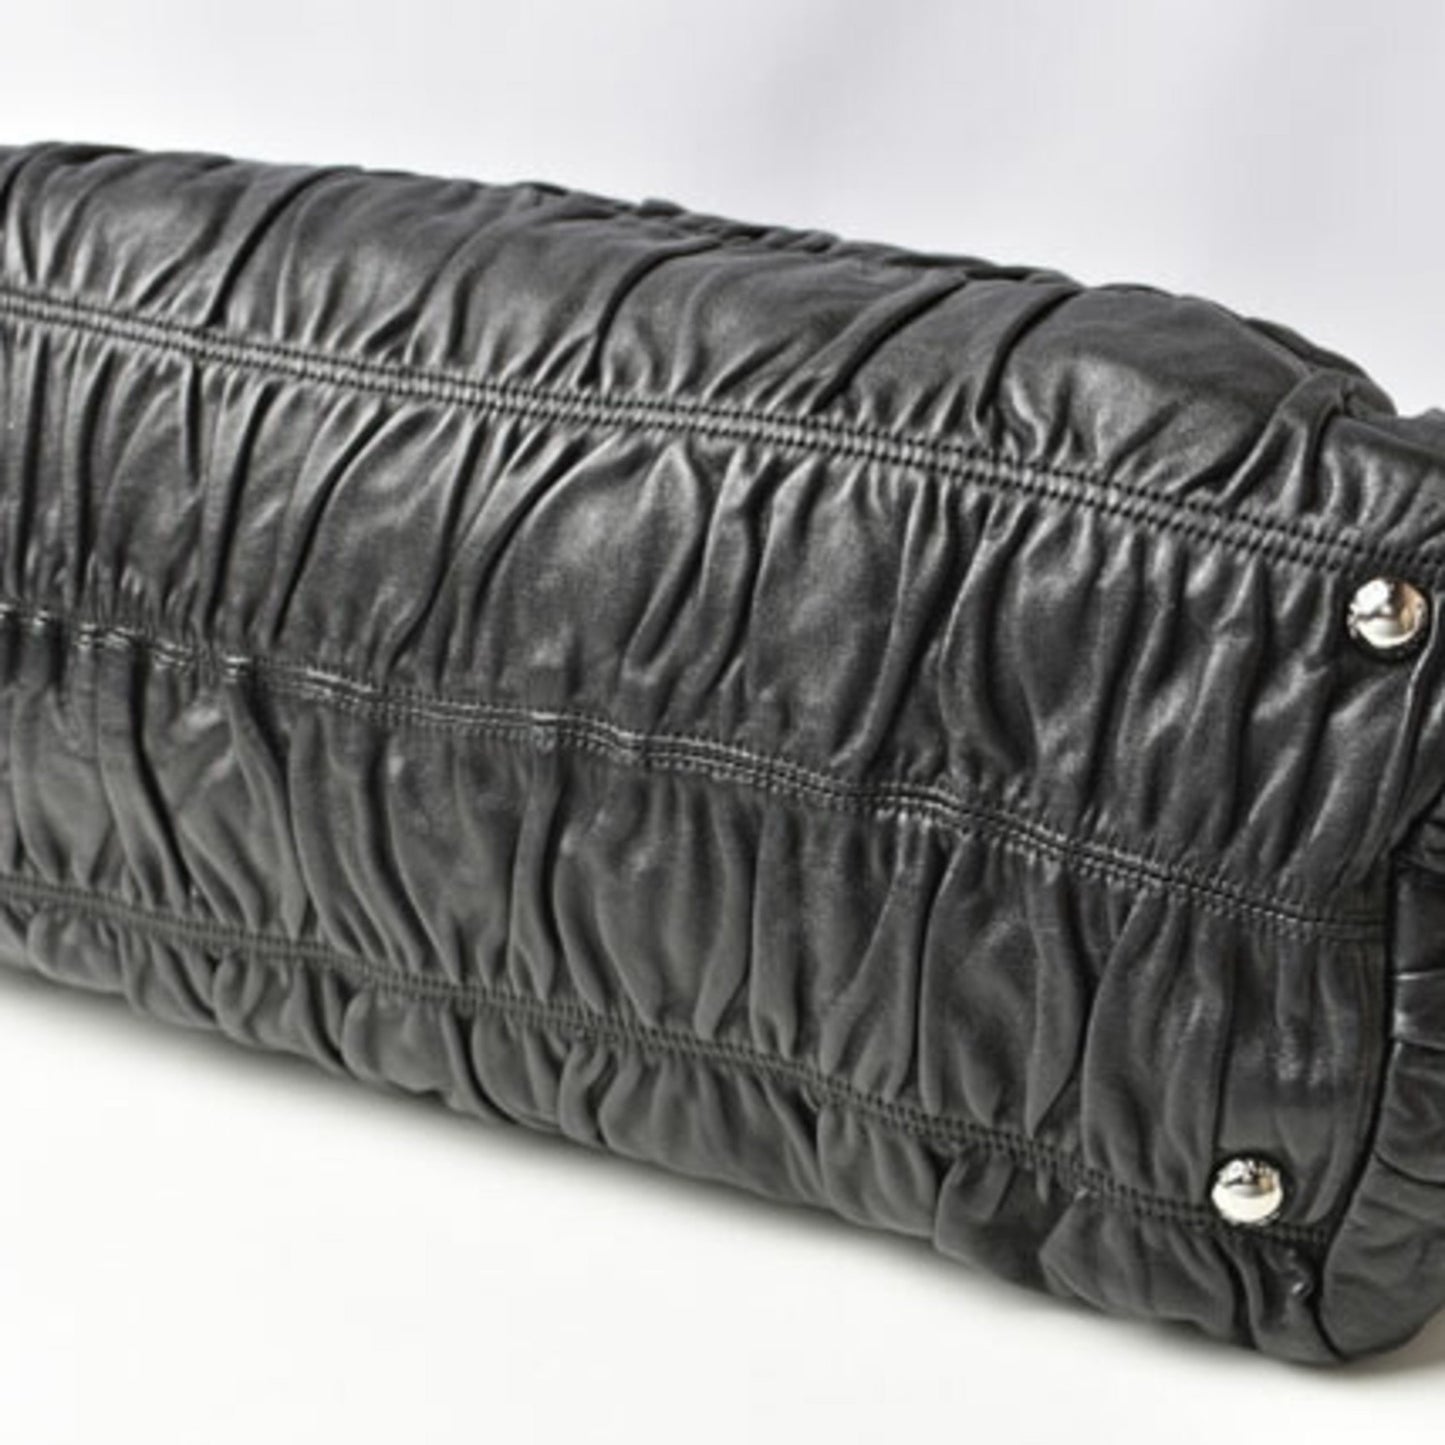 Prada Women's Embossed Leather Shoulder Bag in Black